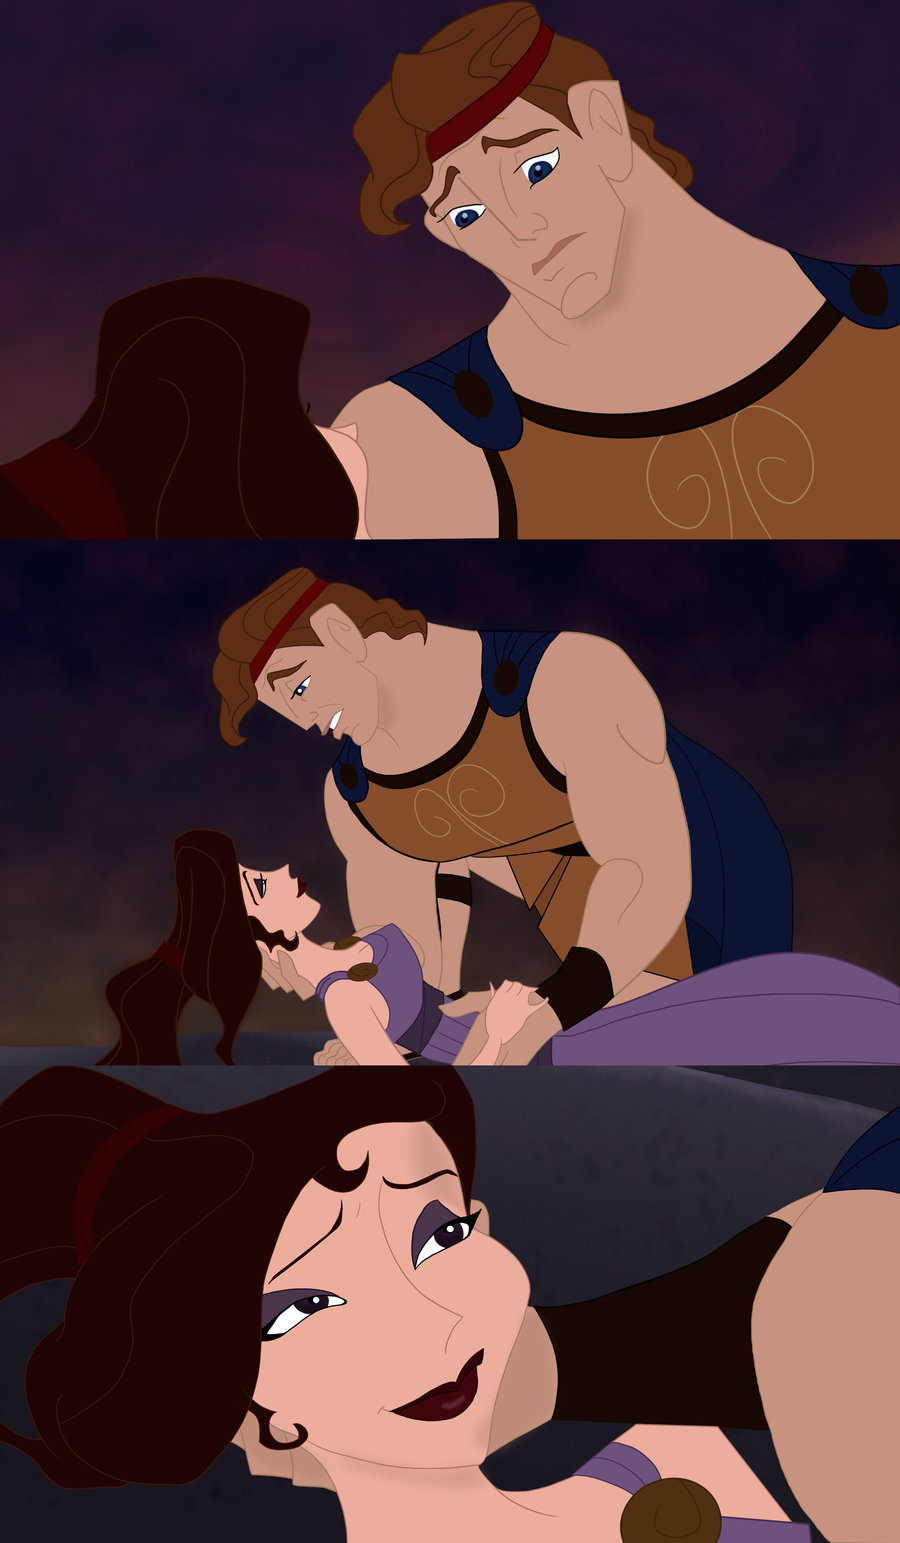 Hercules and Megara